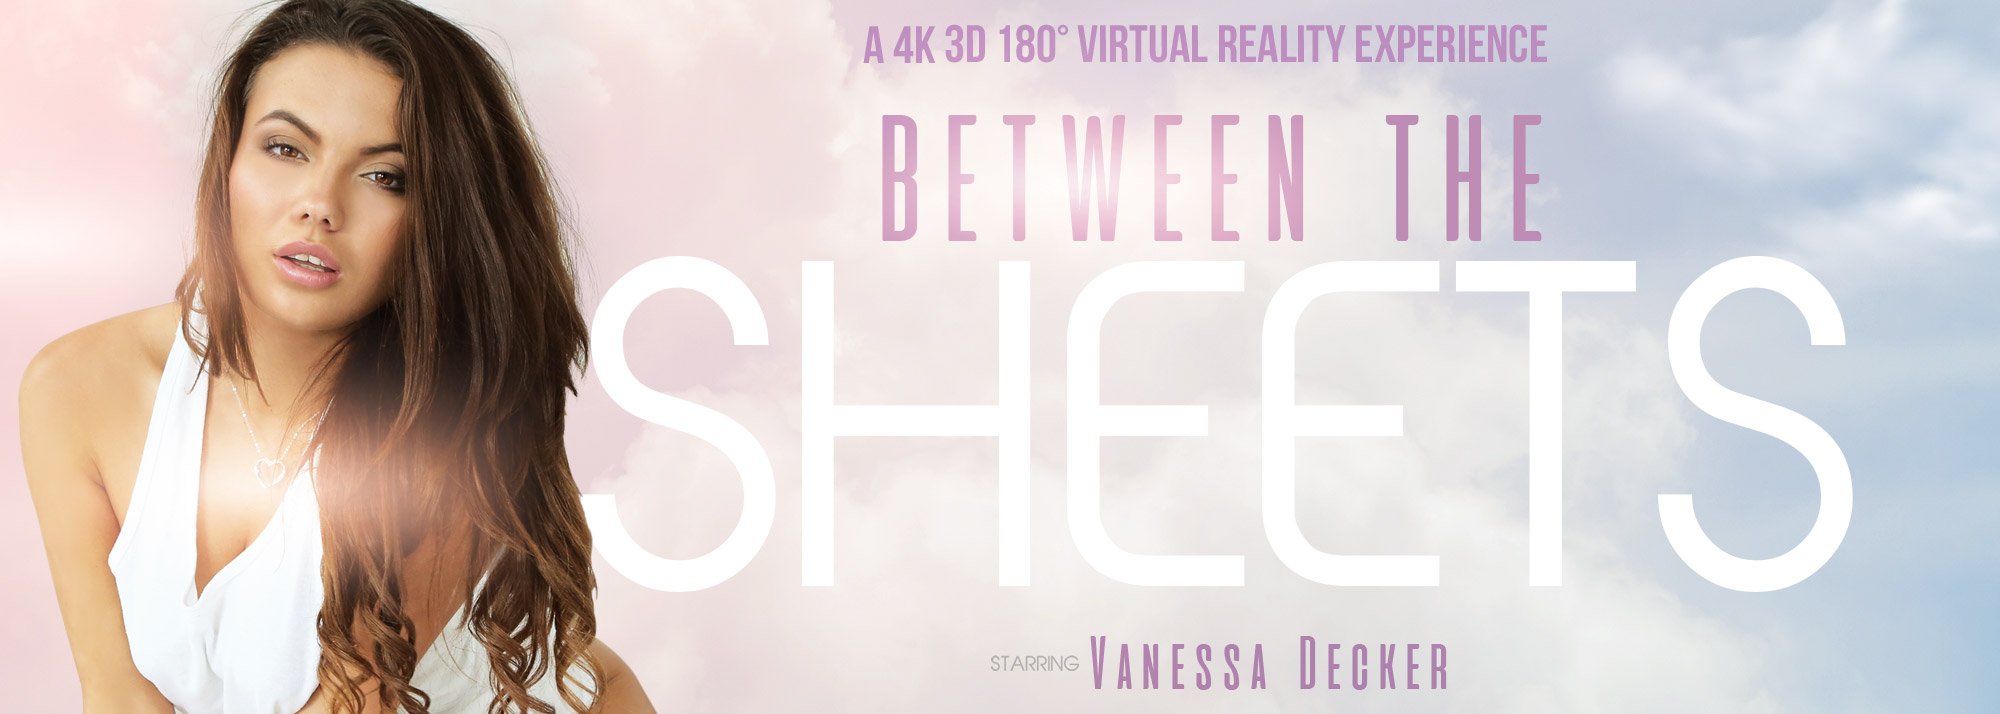 Between The Sheets - VR Porn Video, Starring: Vanessa Decker